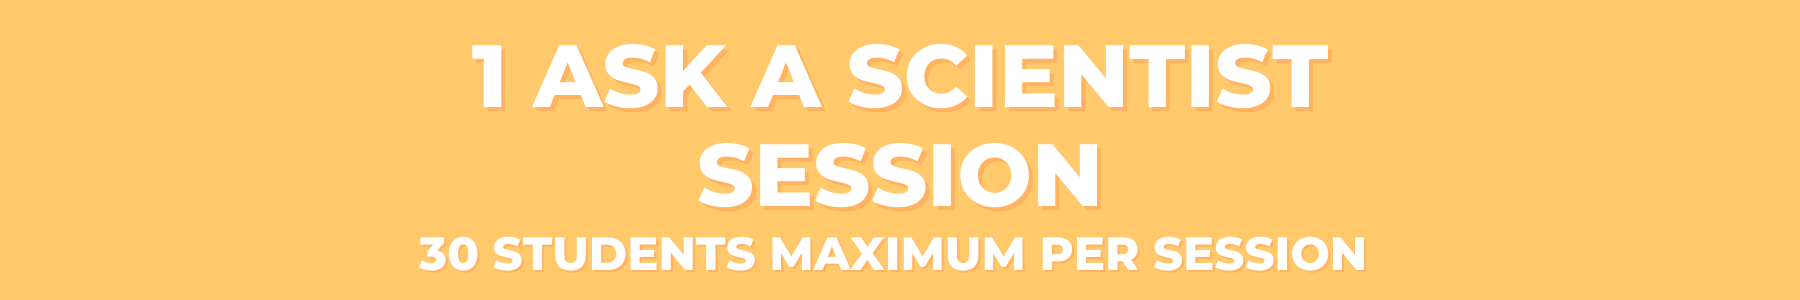 1 ask a scientist session 30 students maximum per session